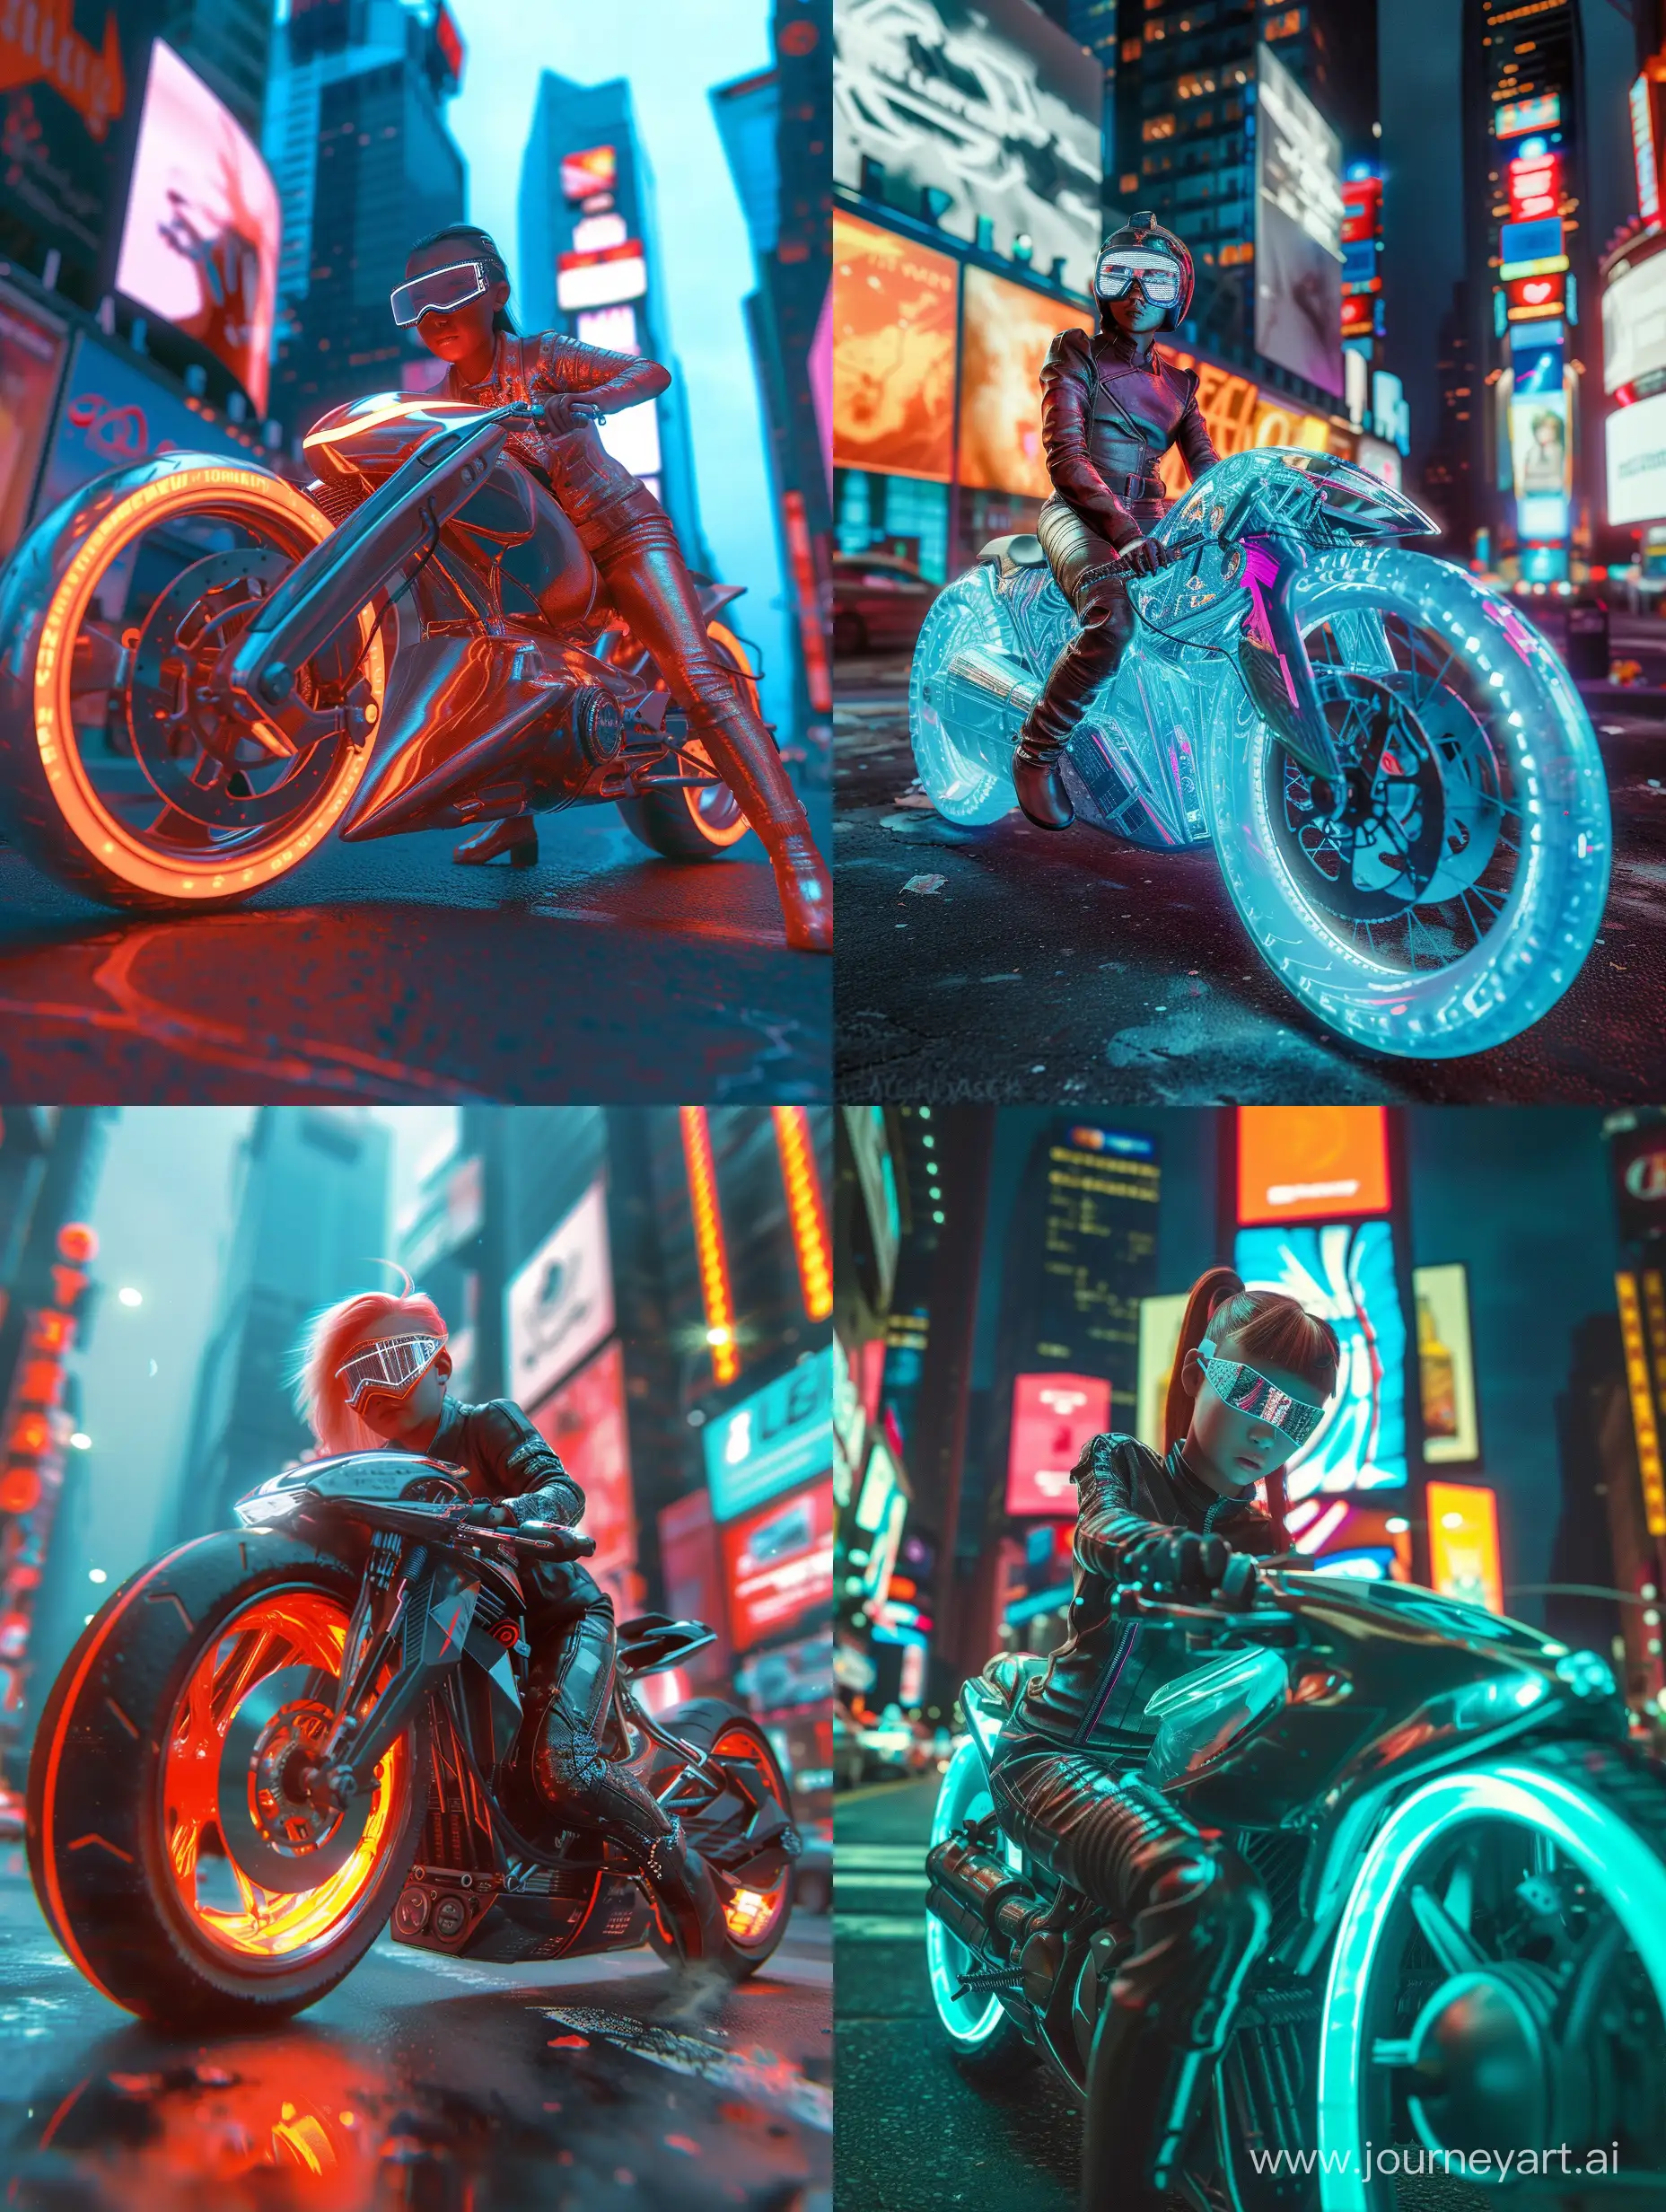 Futuristic-Cyberpunk-Girl-Riding-Motorcycle-in-Neon-Cityscape